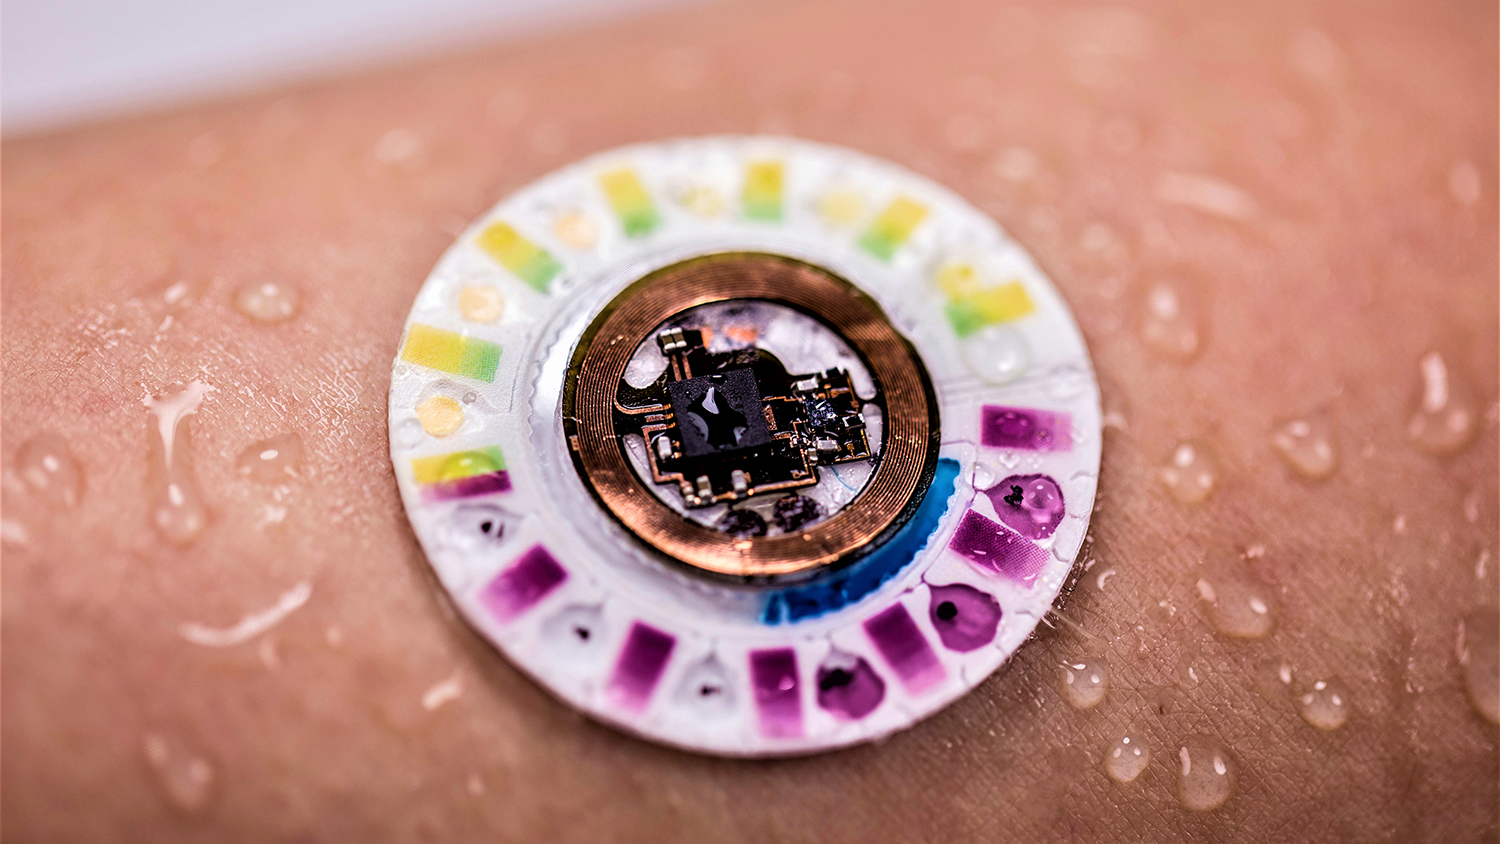 Closeup photo of a white, round, multicolored biosensor attached to person's wet skin.